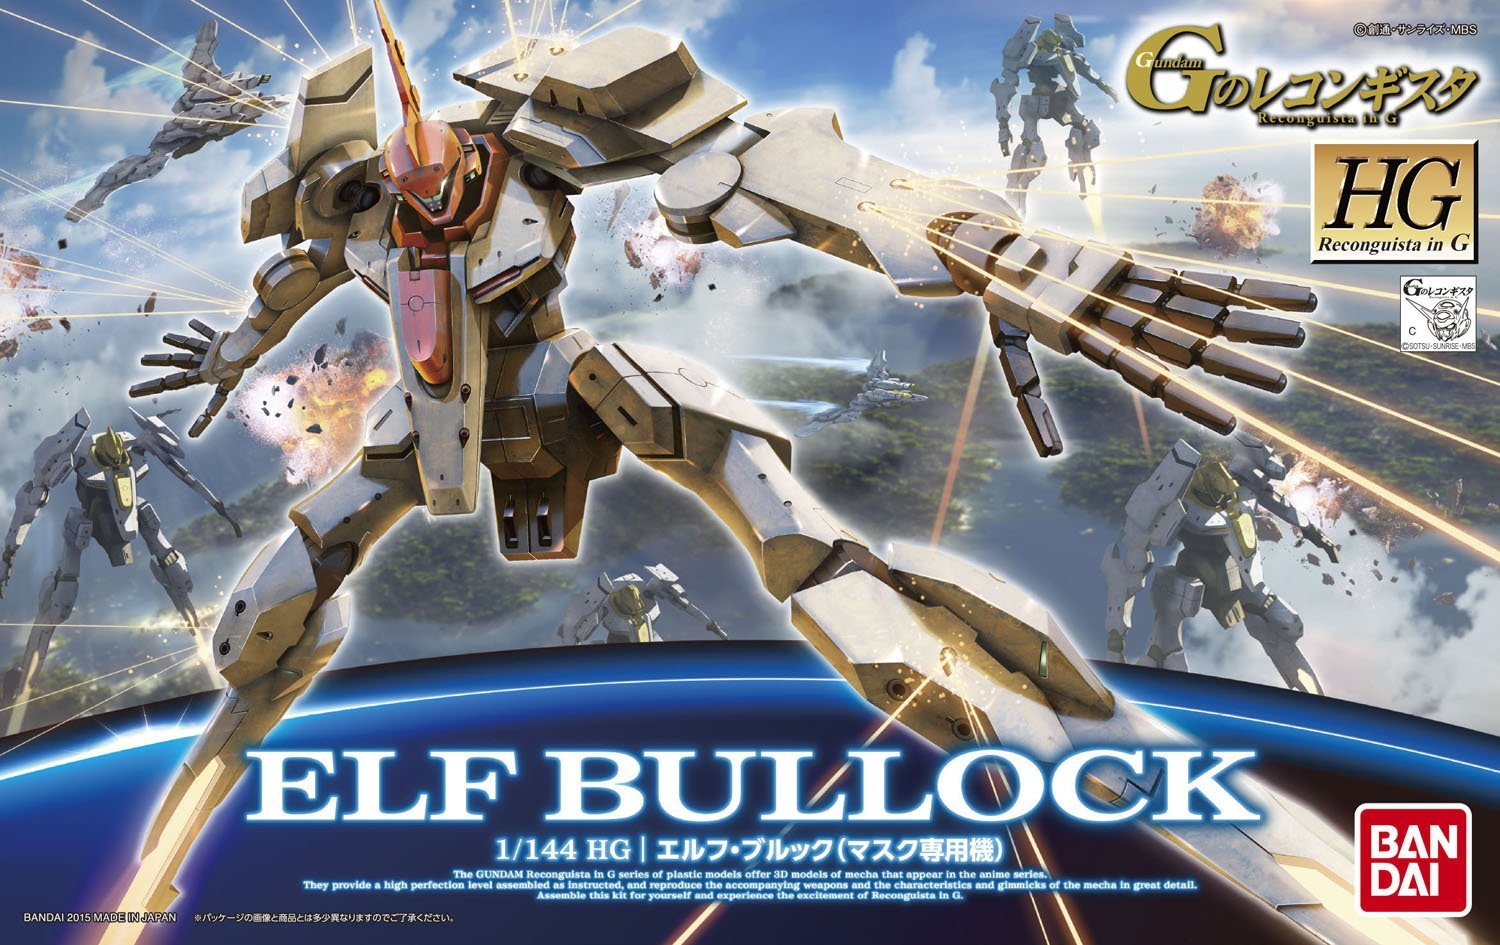 Gundam 1/144 HG Reconguista G #08 Elf Bullock Model Kit